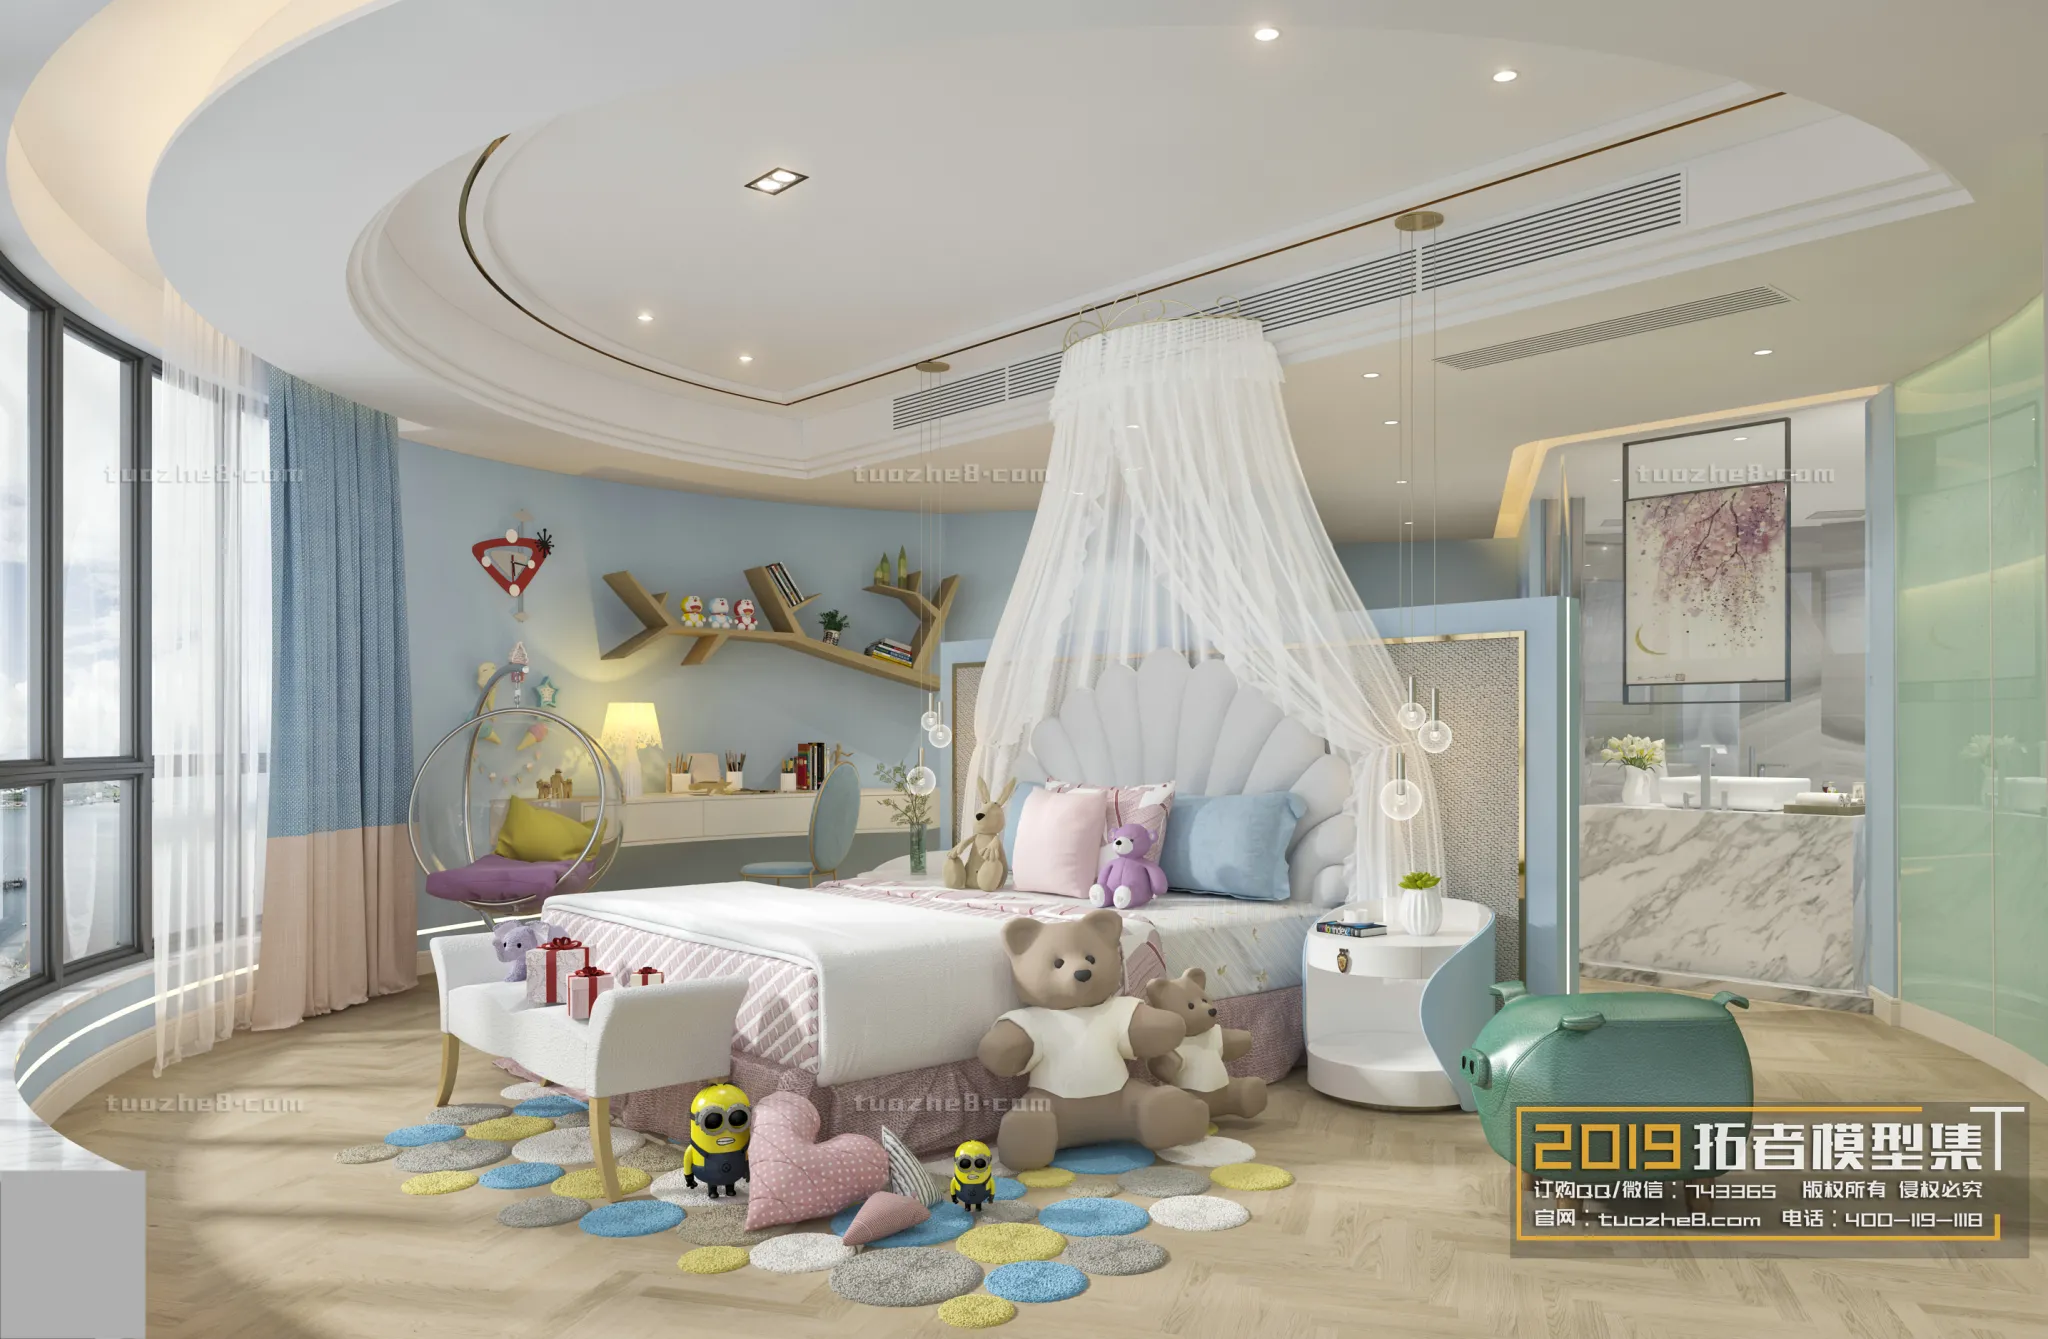 Extension Interior – BEDROOM – CHILDRENROOM – 001